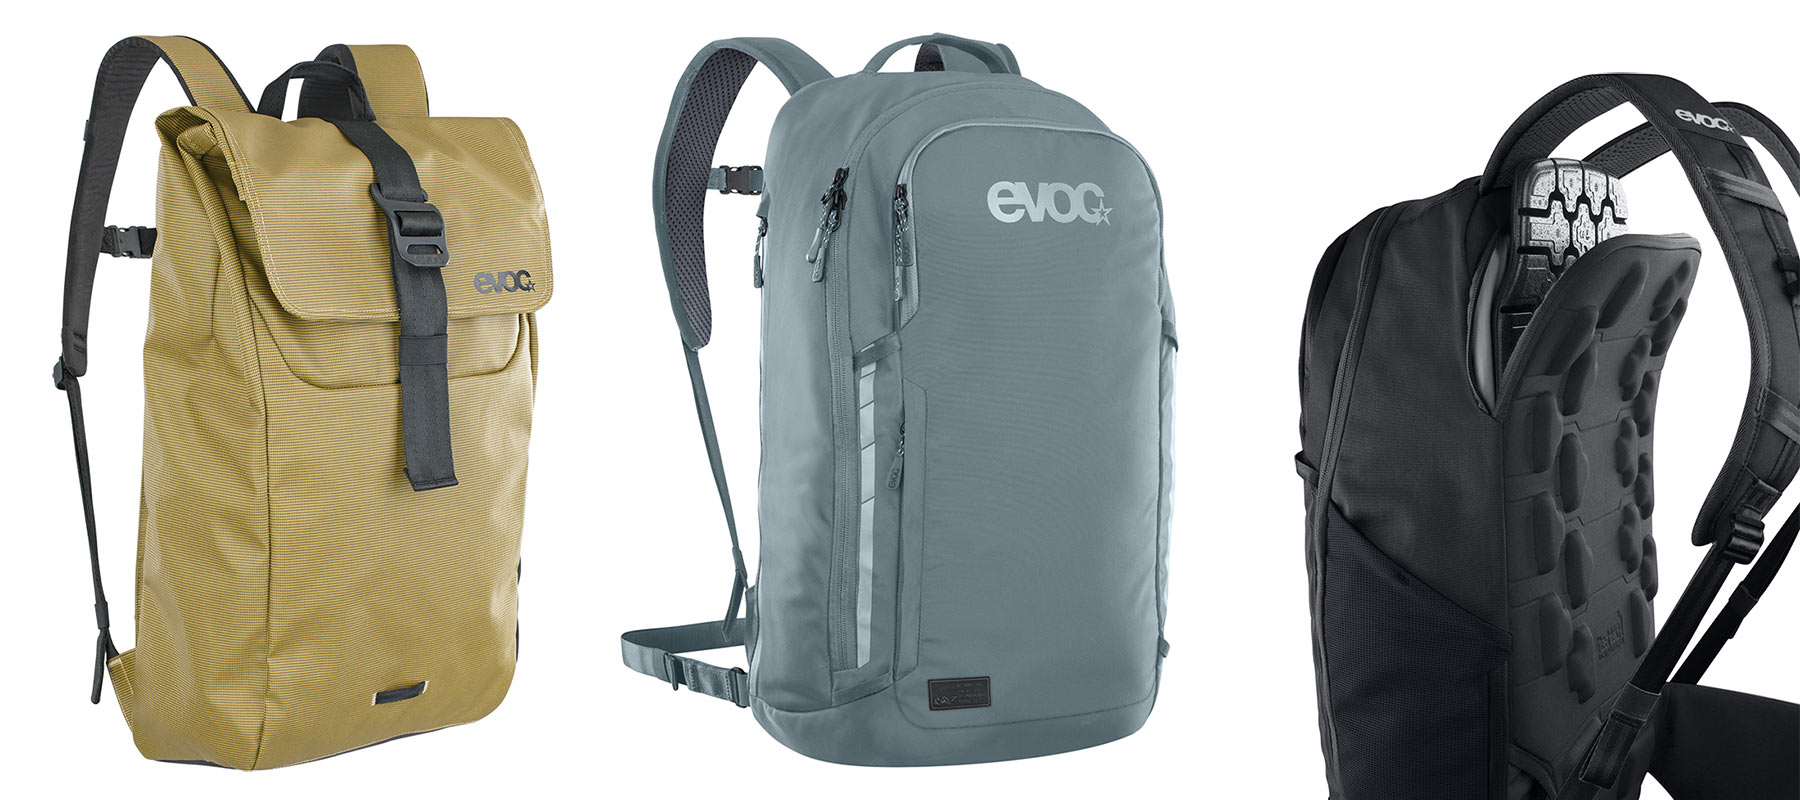 EVOC Commute commuter backpacks